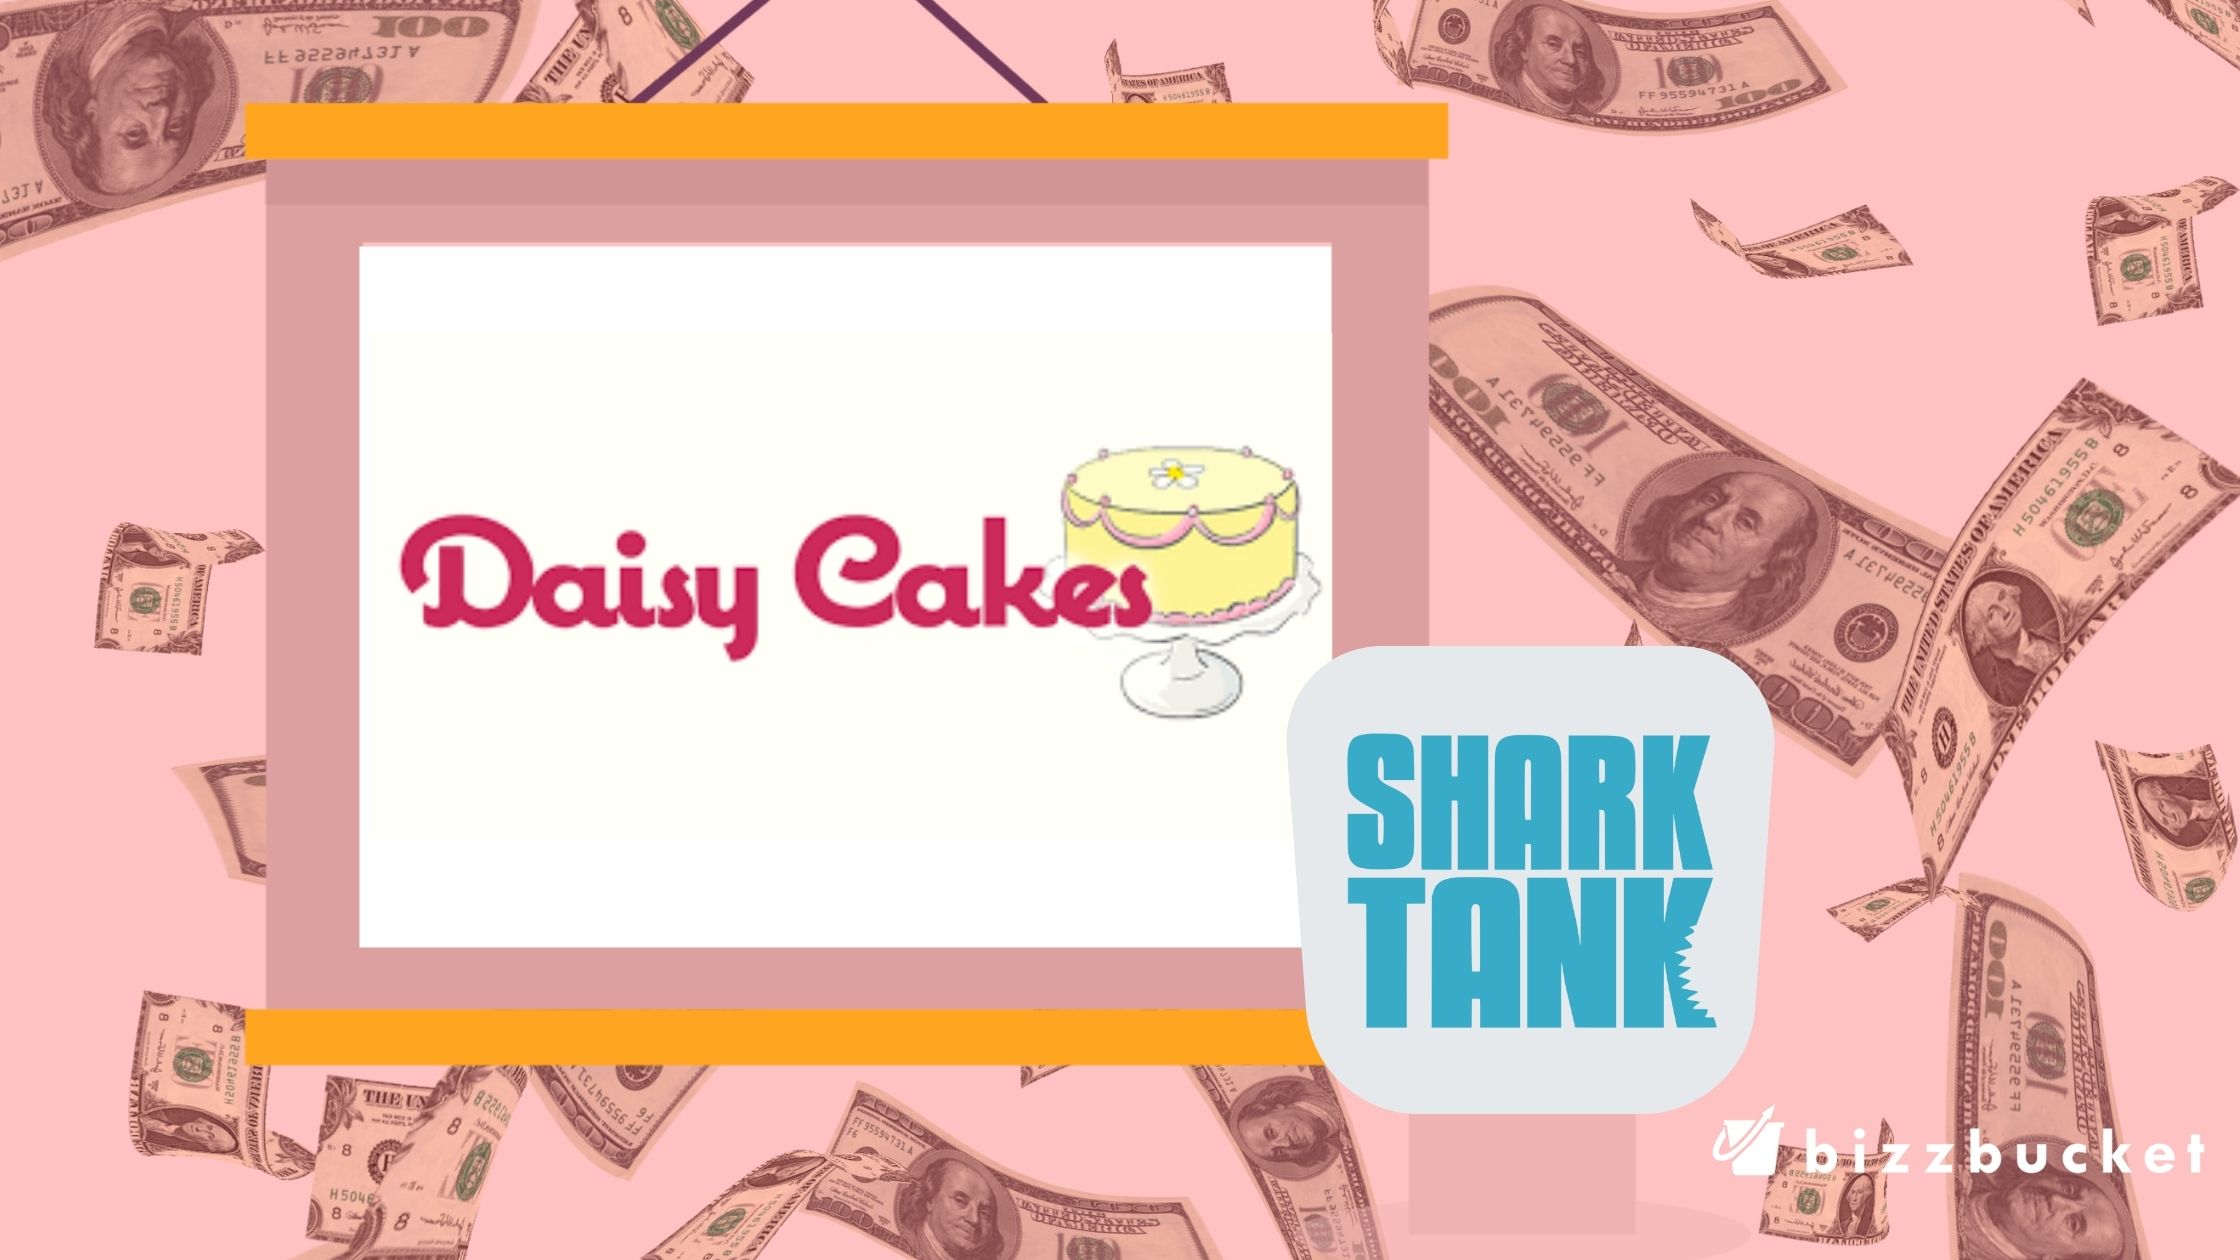 Daisy Cakes shark tank update